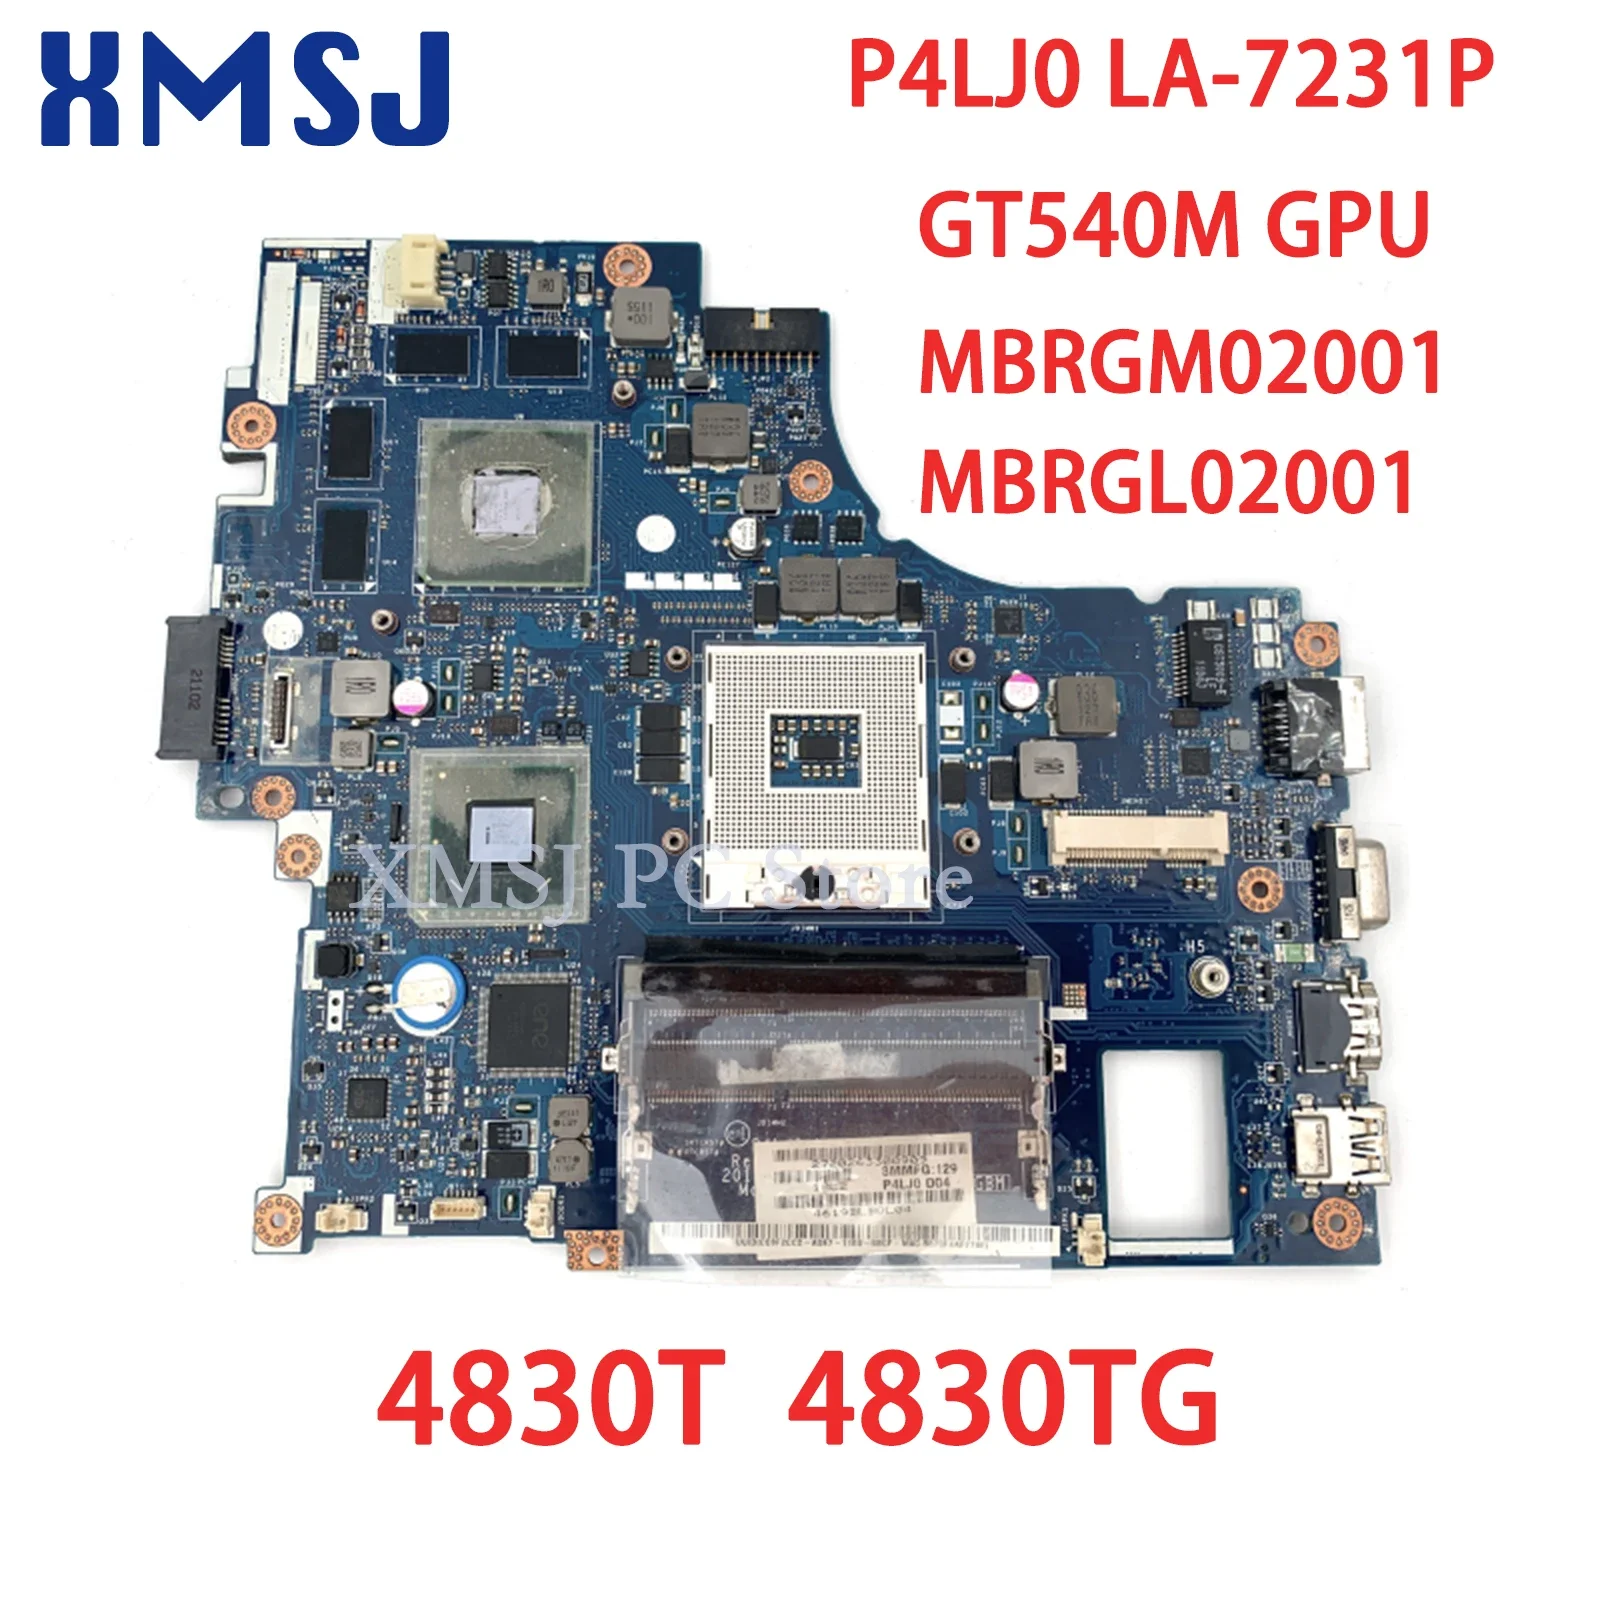 

XMSJ For Acer Aspire 4830TG 4830T Laptop Motherboard P4LJ0 LA-7231P MBRGM02001 MBRGL02001 GT540M GPU DDR3 Main Board